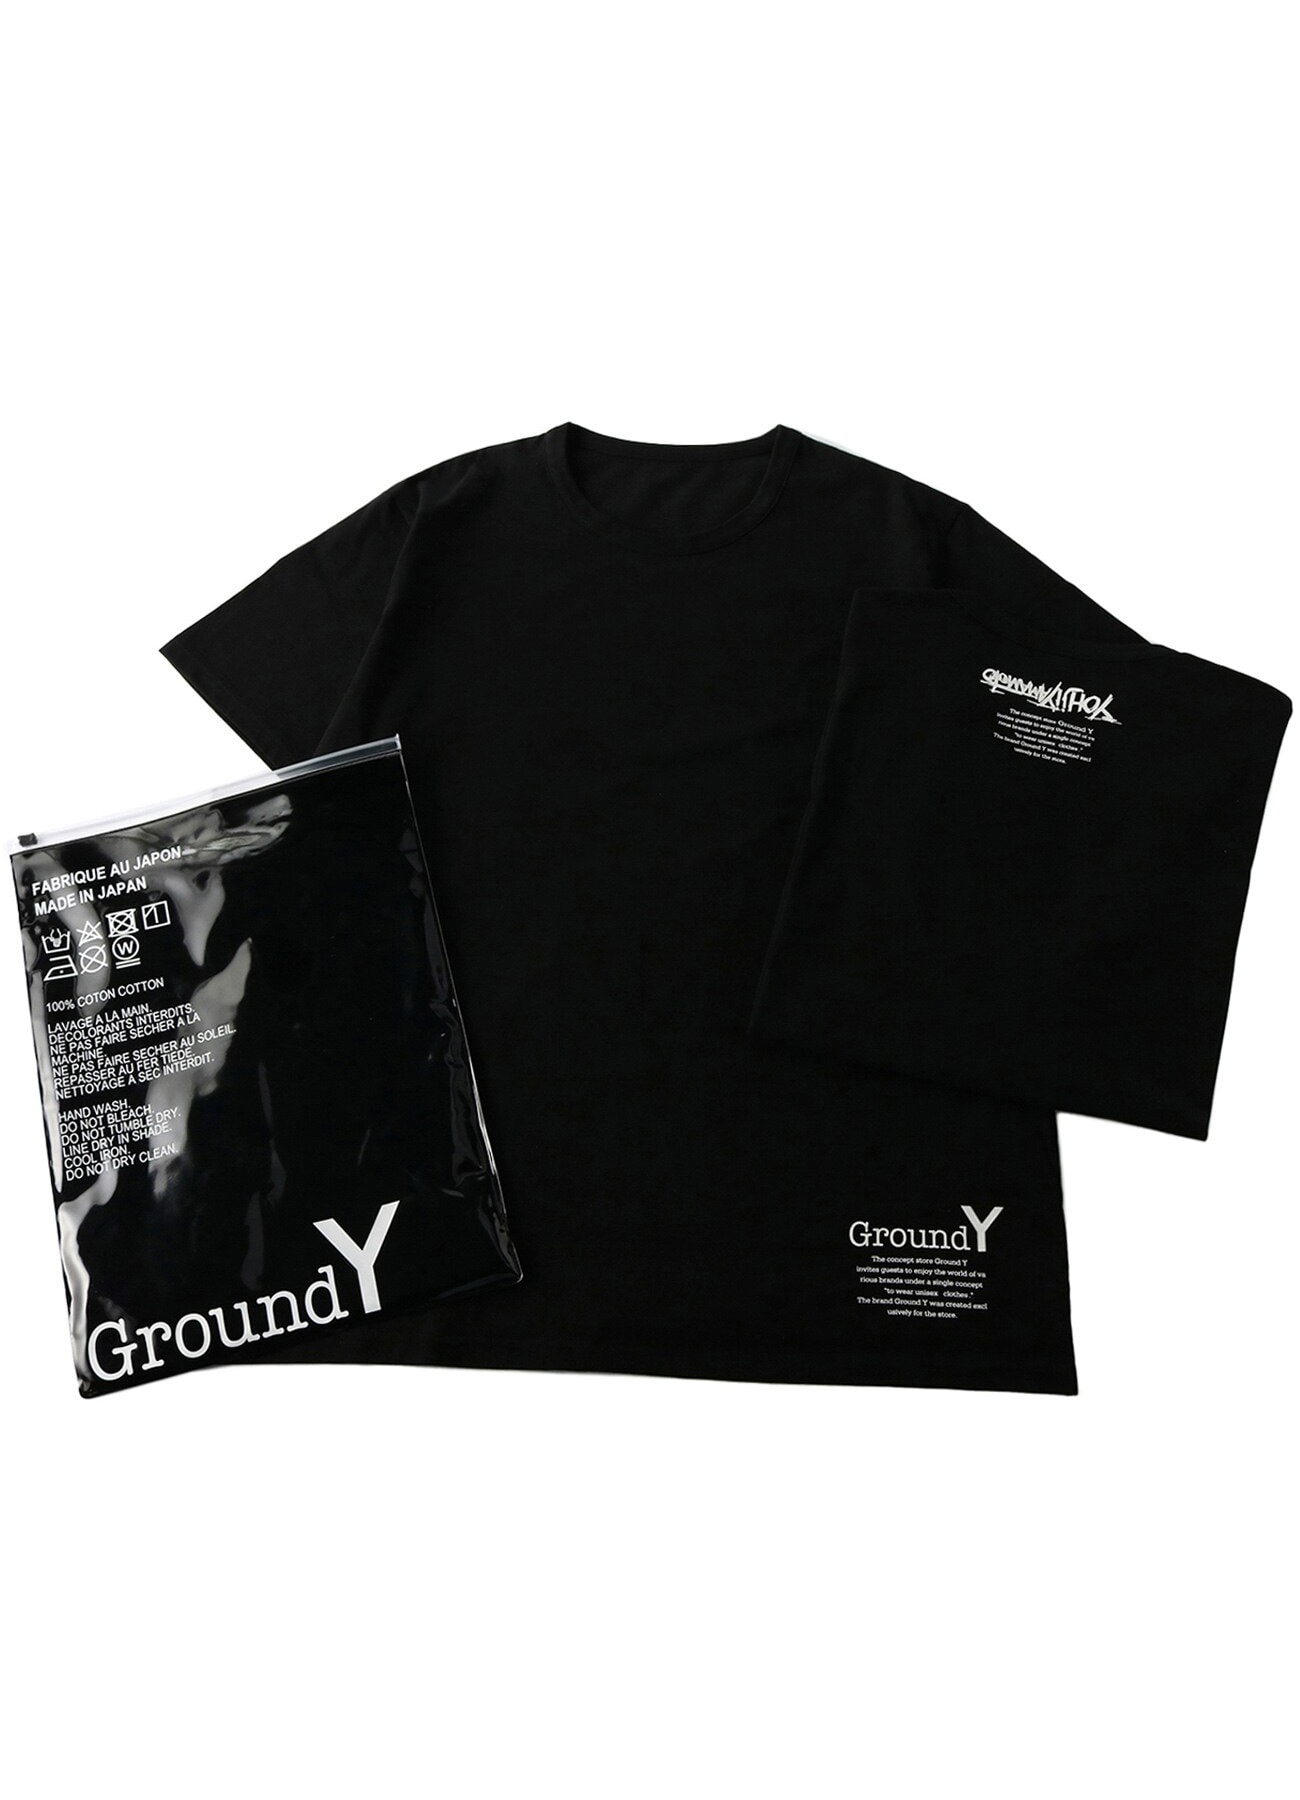 CUT & SEWN | GroundY | 【Official】 THE SHOP YOHJI YAMAMOTO